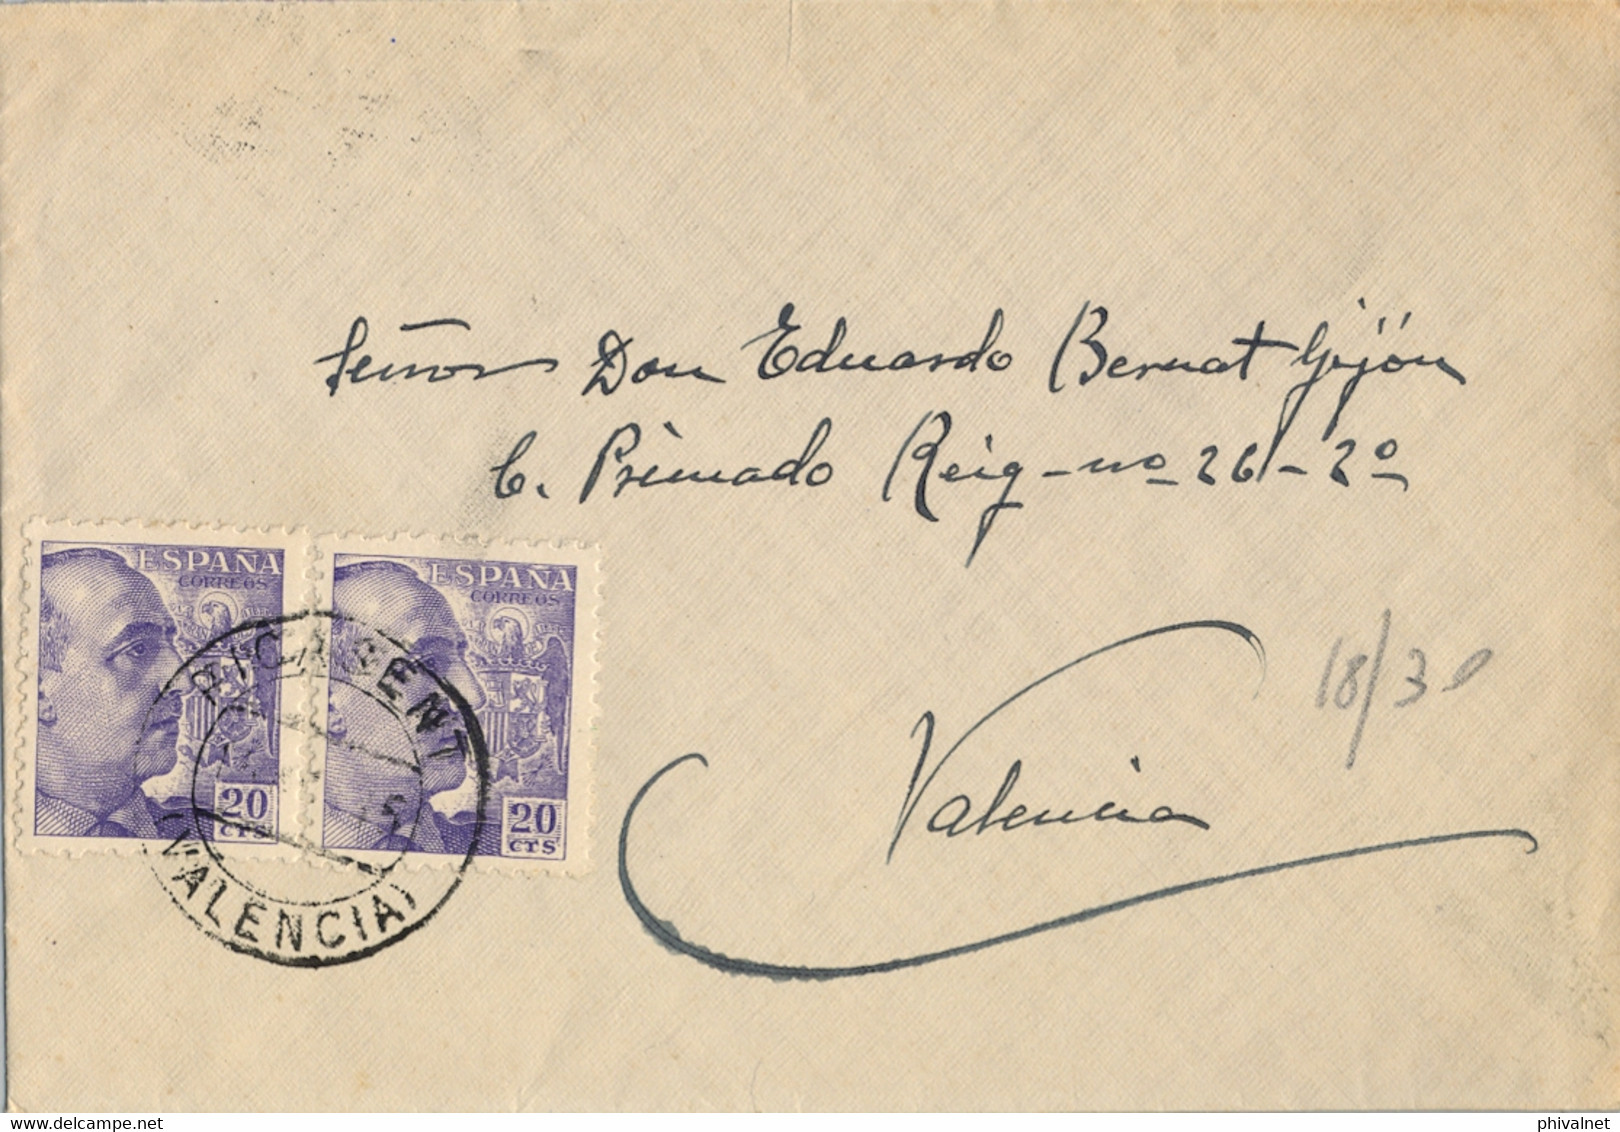 1945 , VALENCIA , SOBRE CIRCULADO DESDE PICASENT , LLEGADA AL DORSO - Lettres & Documents